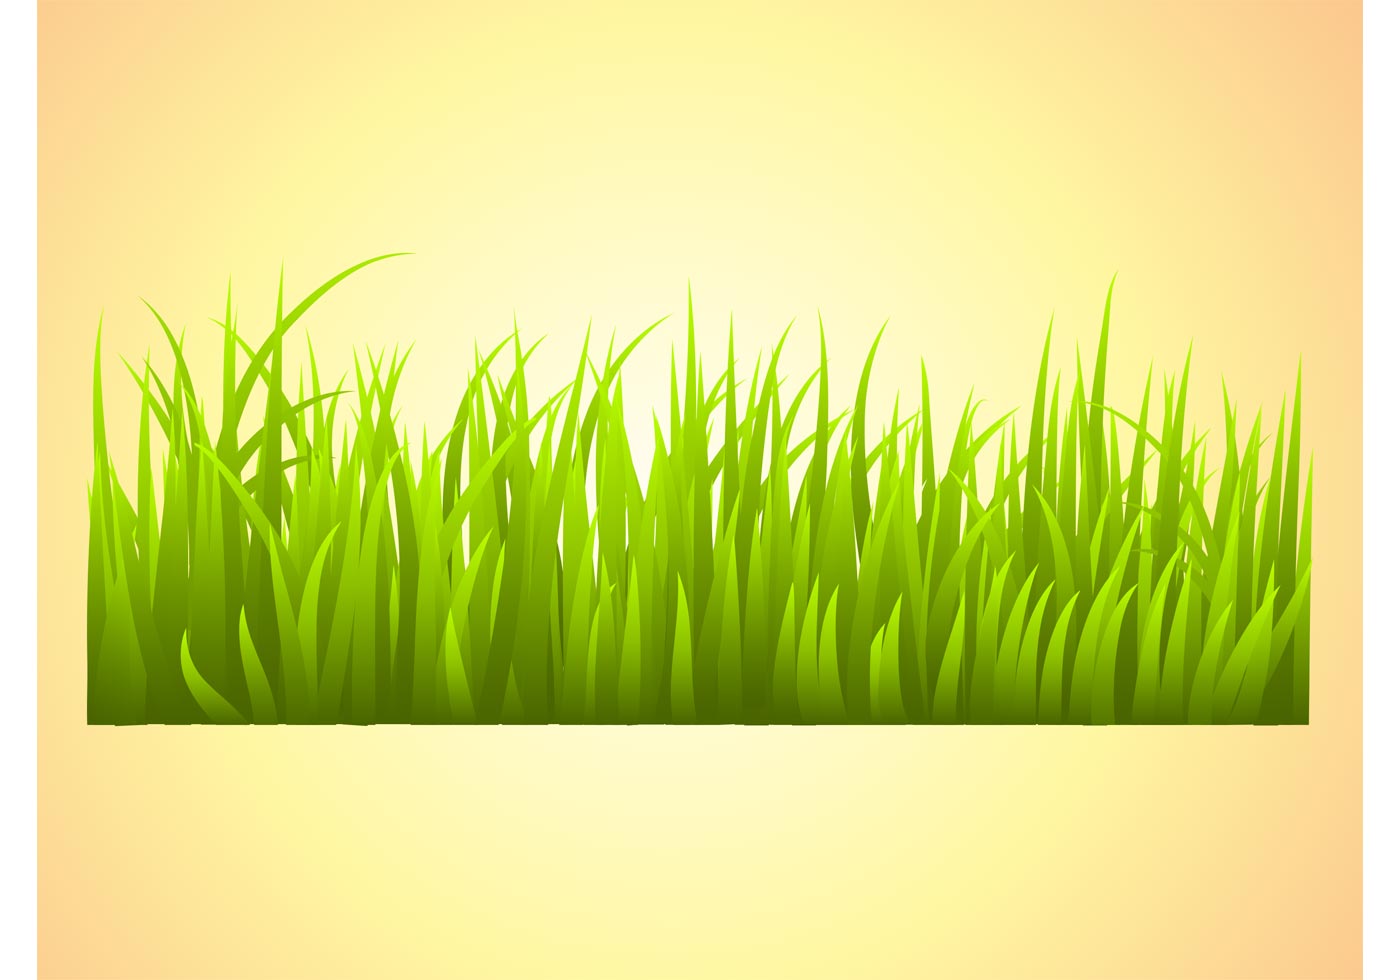 Grass Vector - Download Free Vector Art, Stock Graphics ...